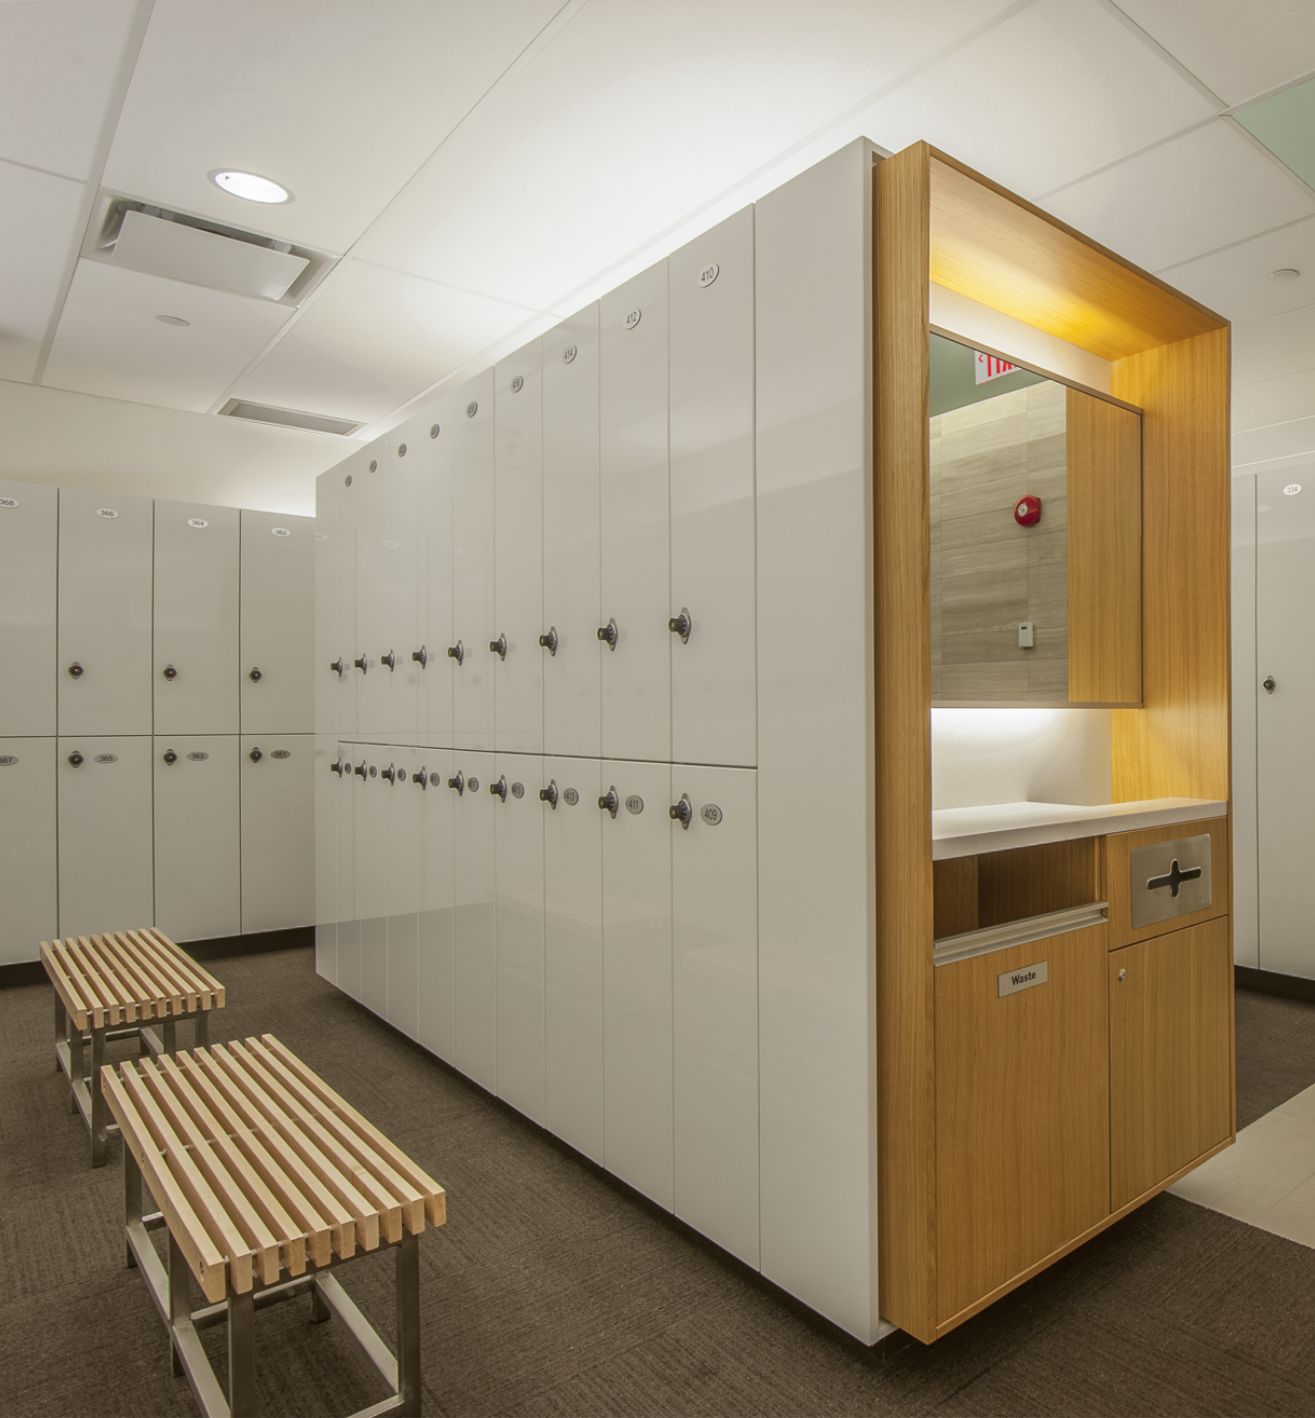 Communal locker room with stacked lockers